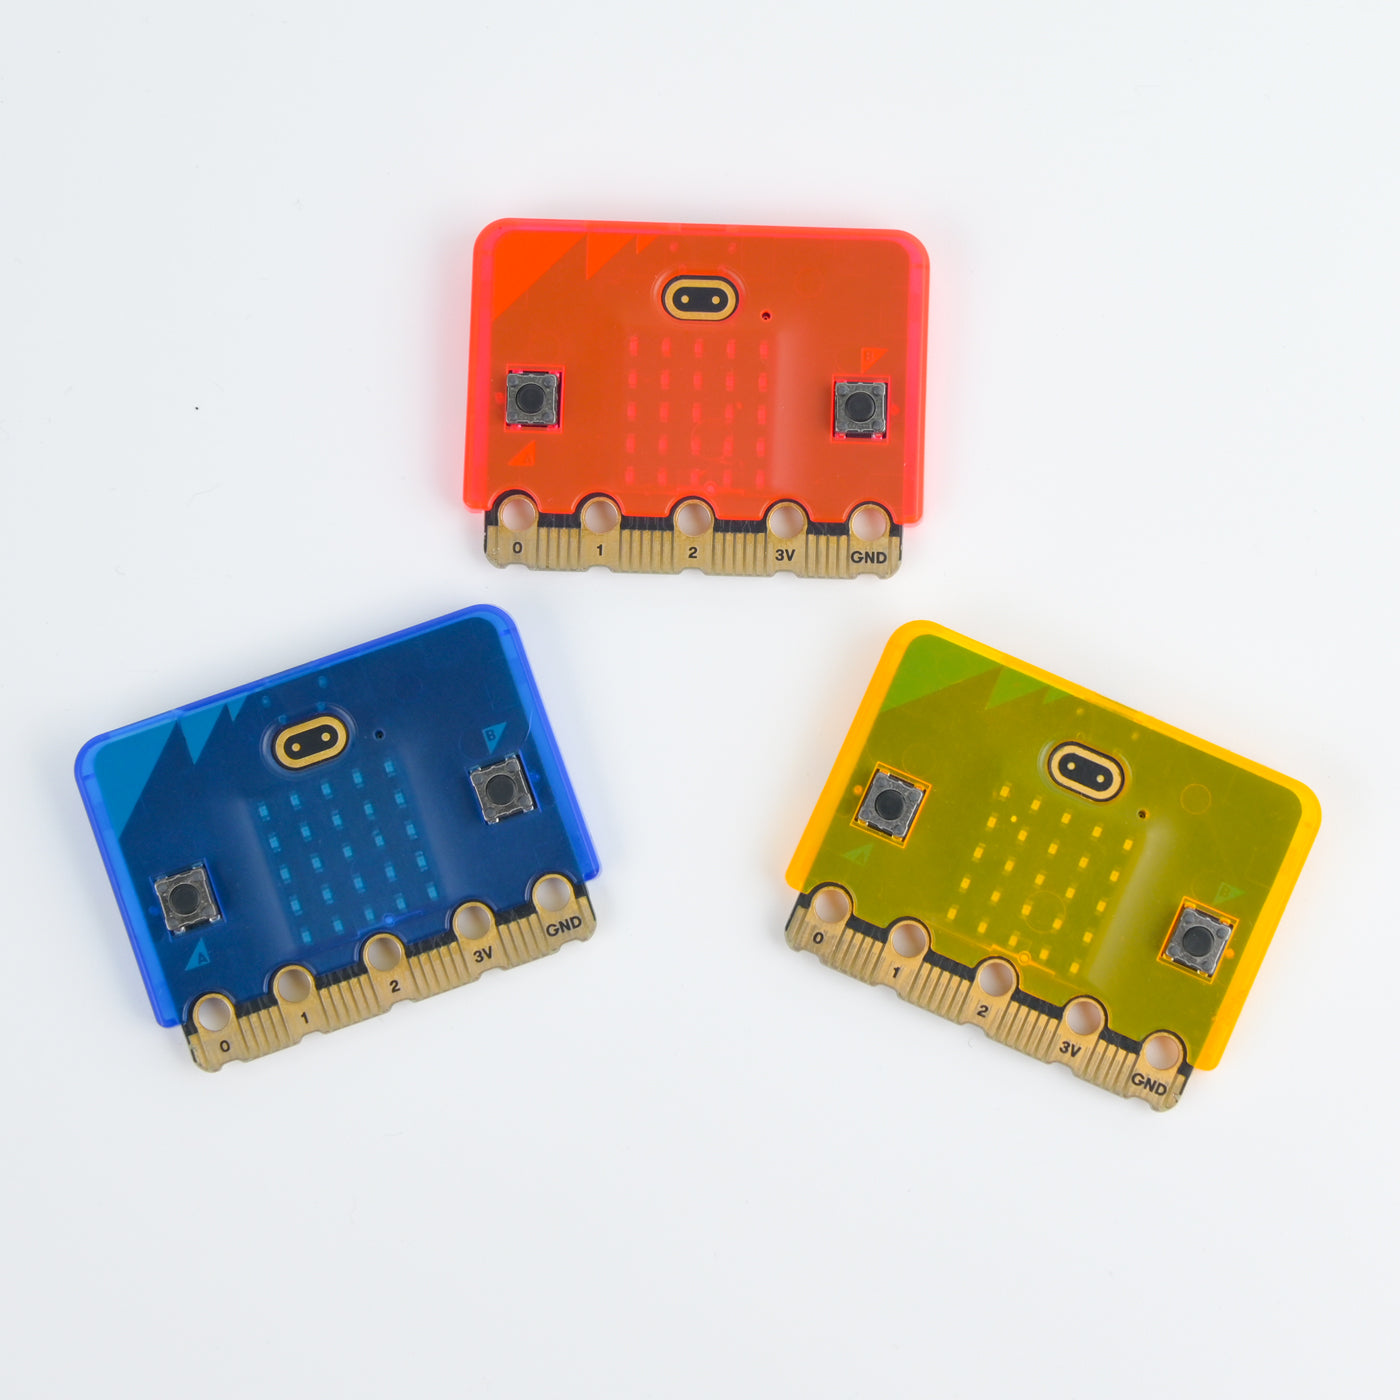 ELECFREAKS microbit Smart Coding Kit for Kids BBC Micro:bit DIY  Programmable Watch, Wearable microbit Extension Board(Wear:bit) for  Micro:bit